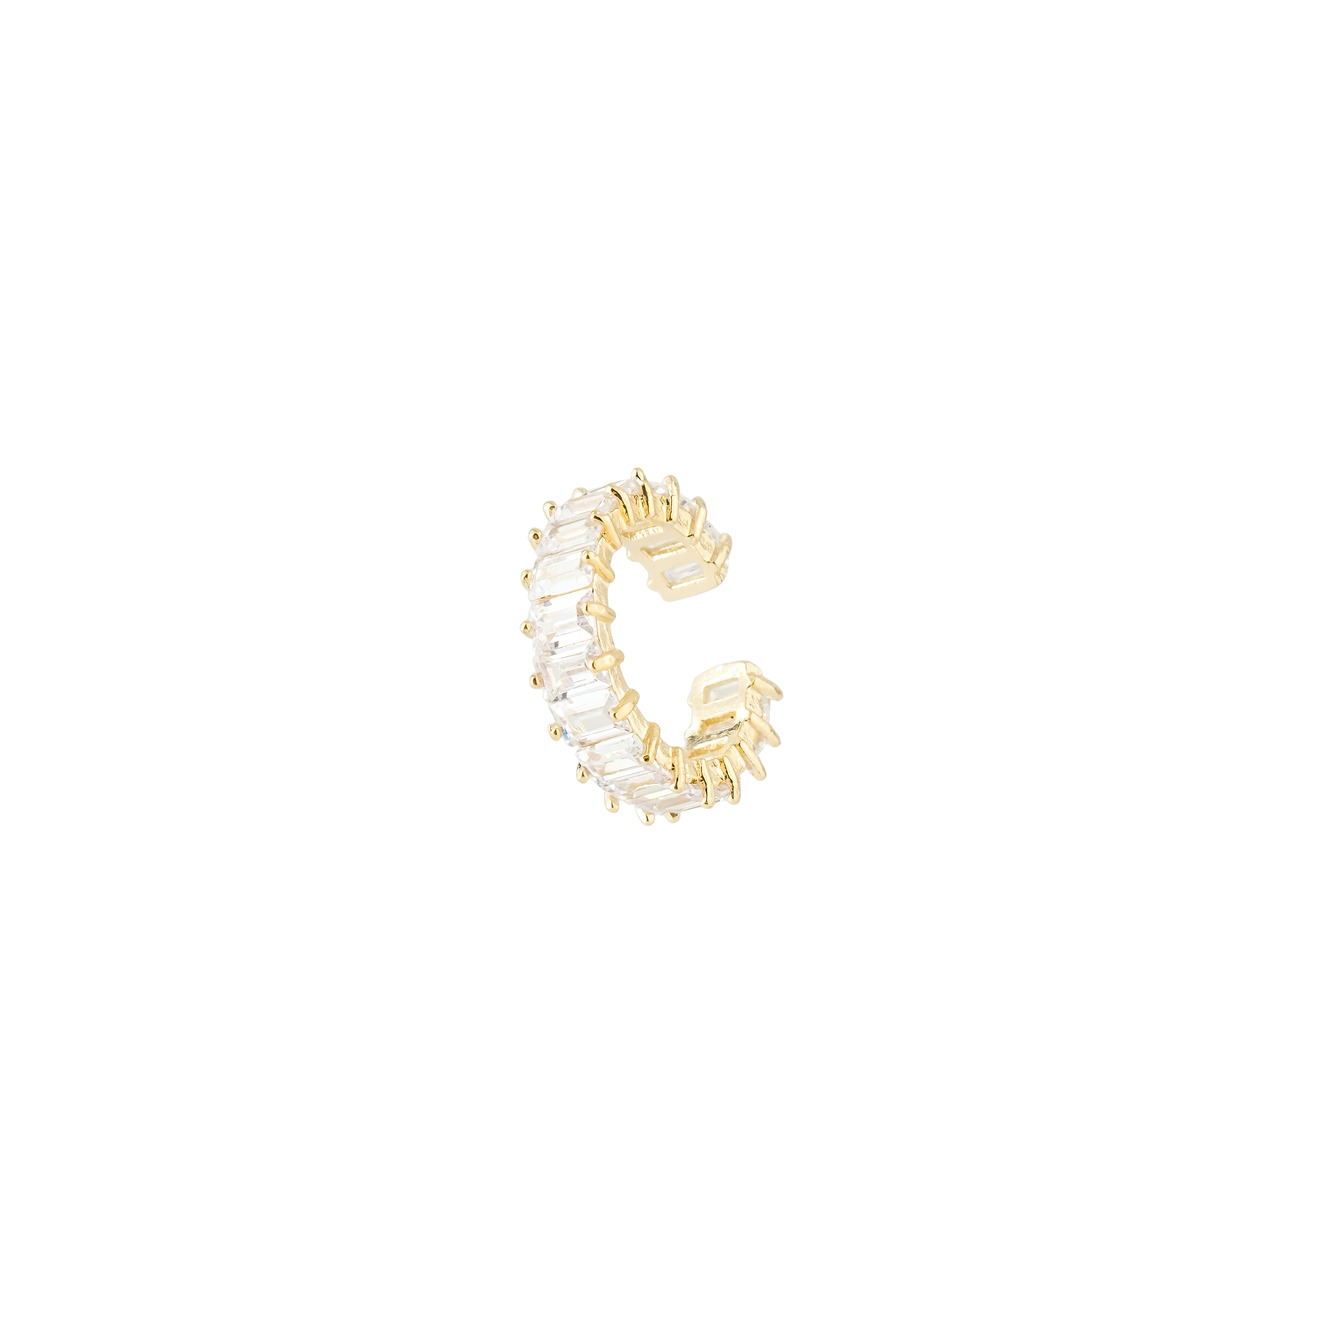 Herald Percy Золотистый кафф с белыми кристаллами herald percy золотистый браслет цепь с кристаллами